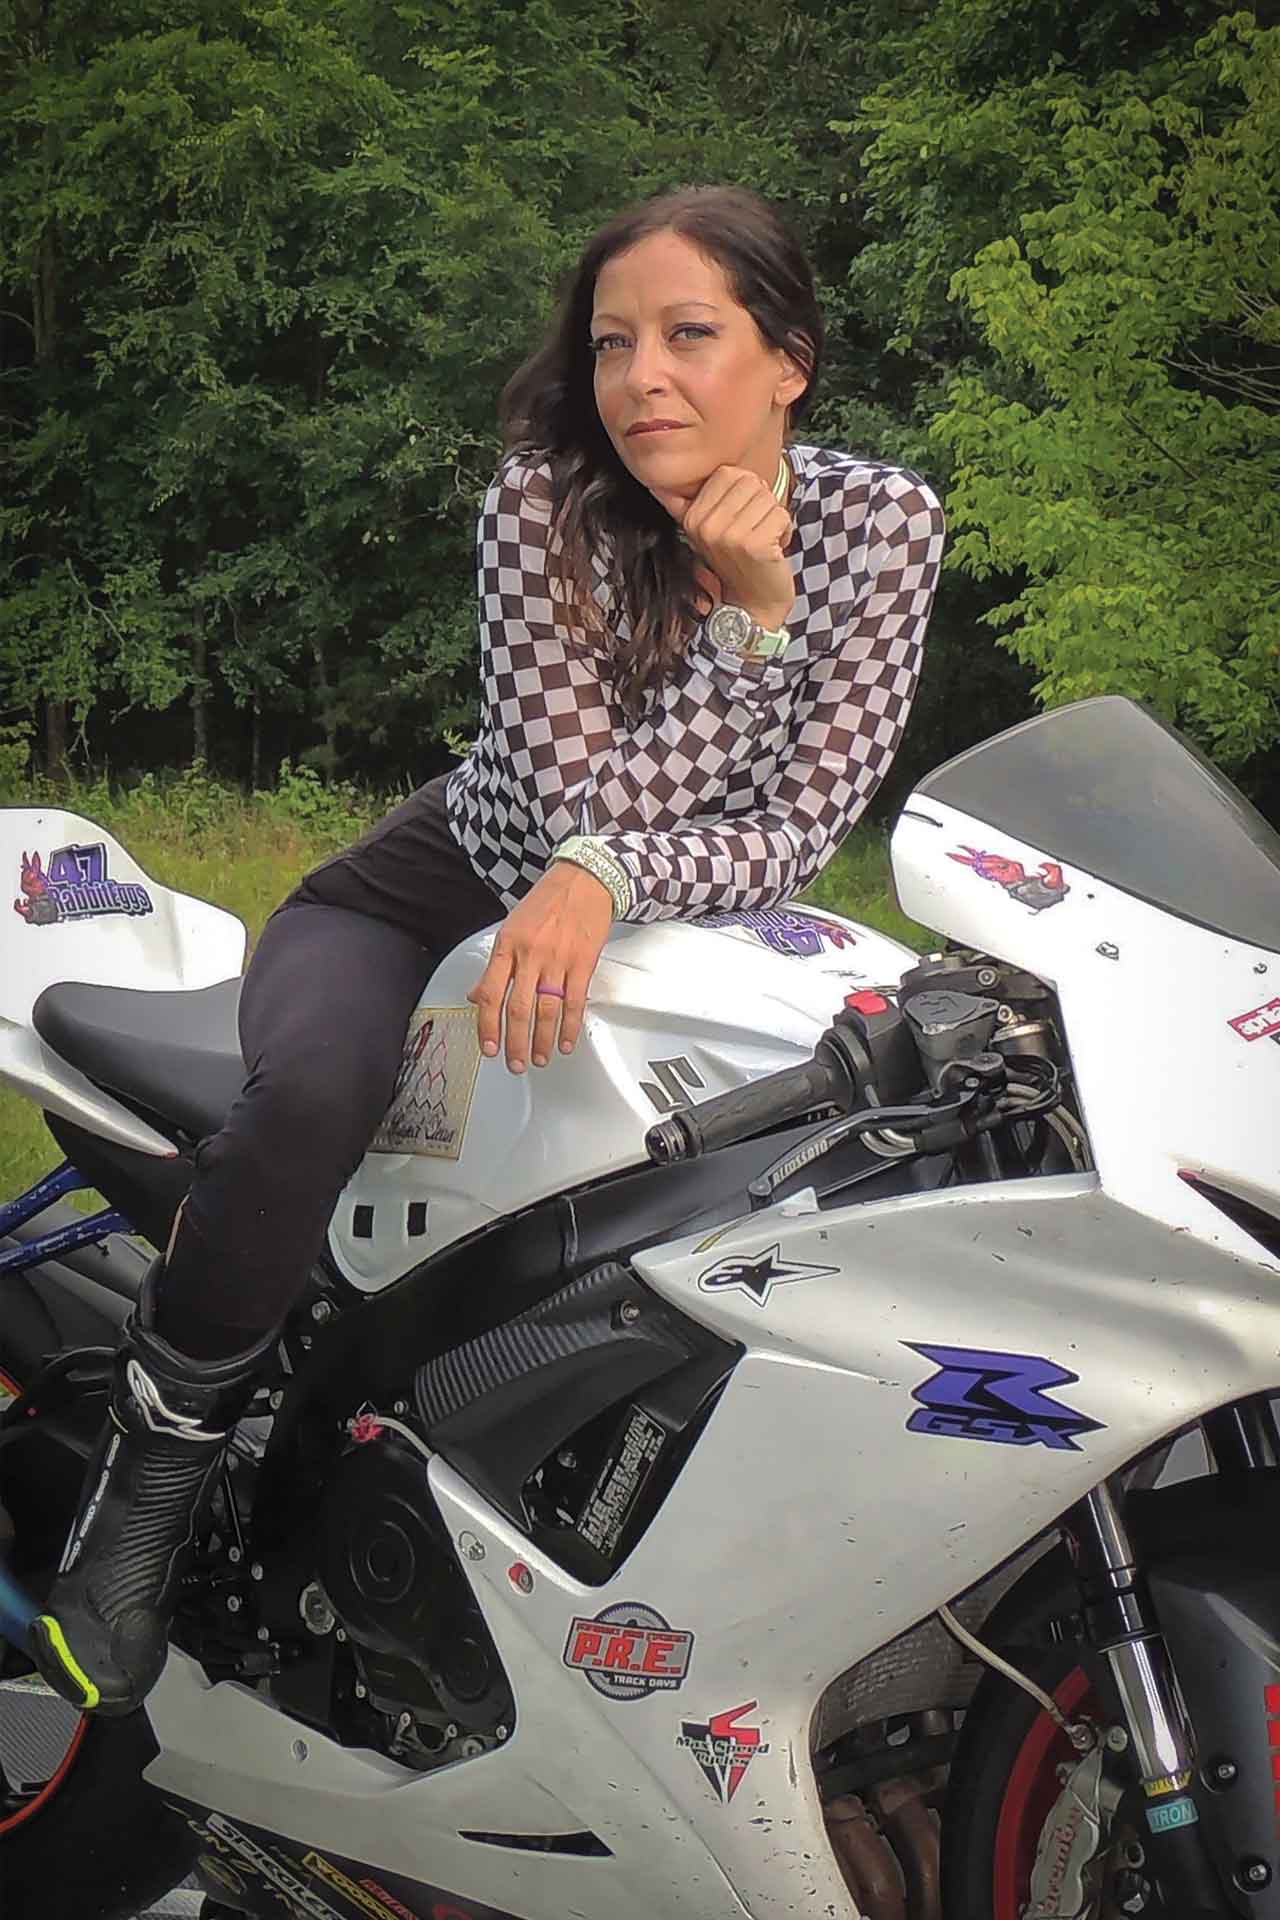 Janelle sits on a white Suzuki motorcycle